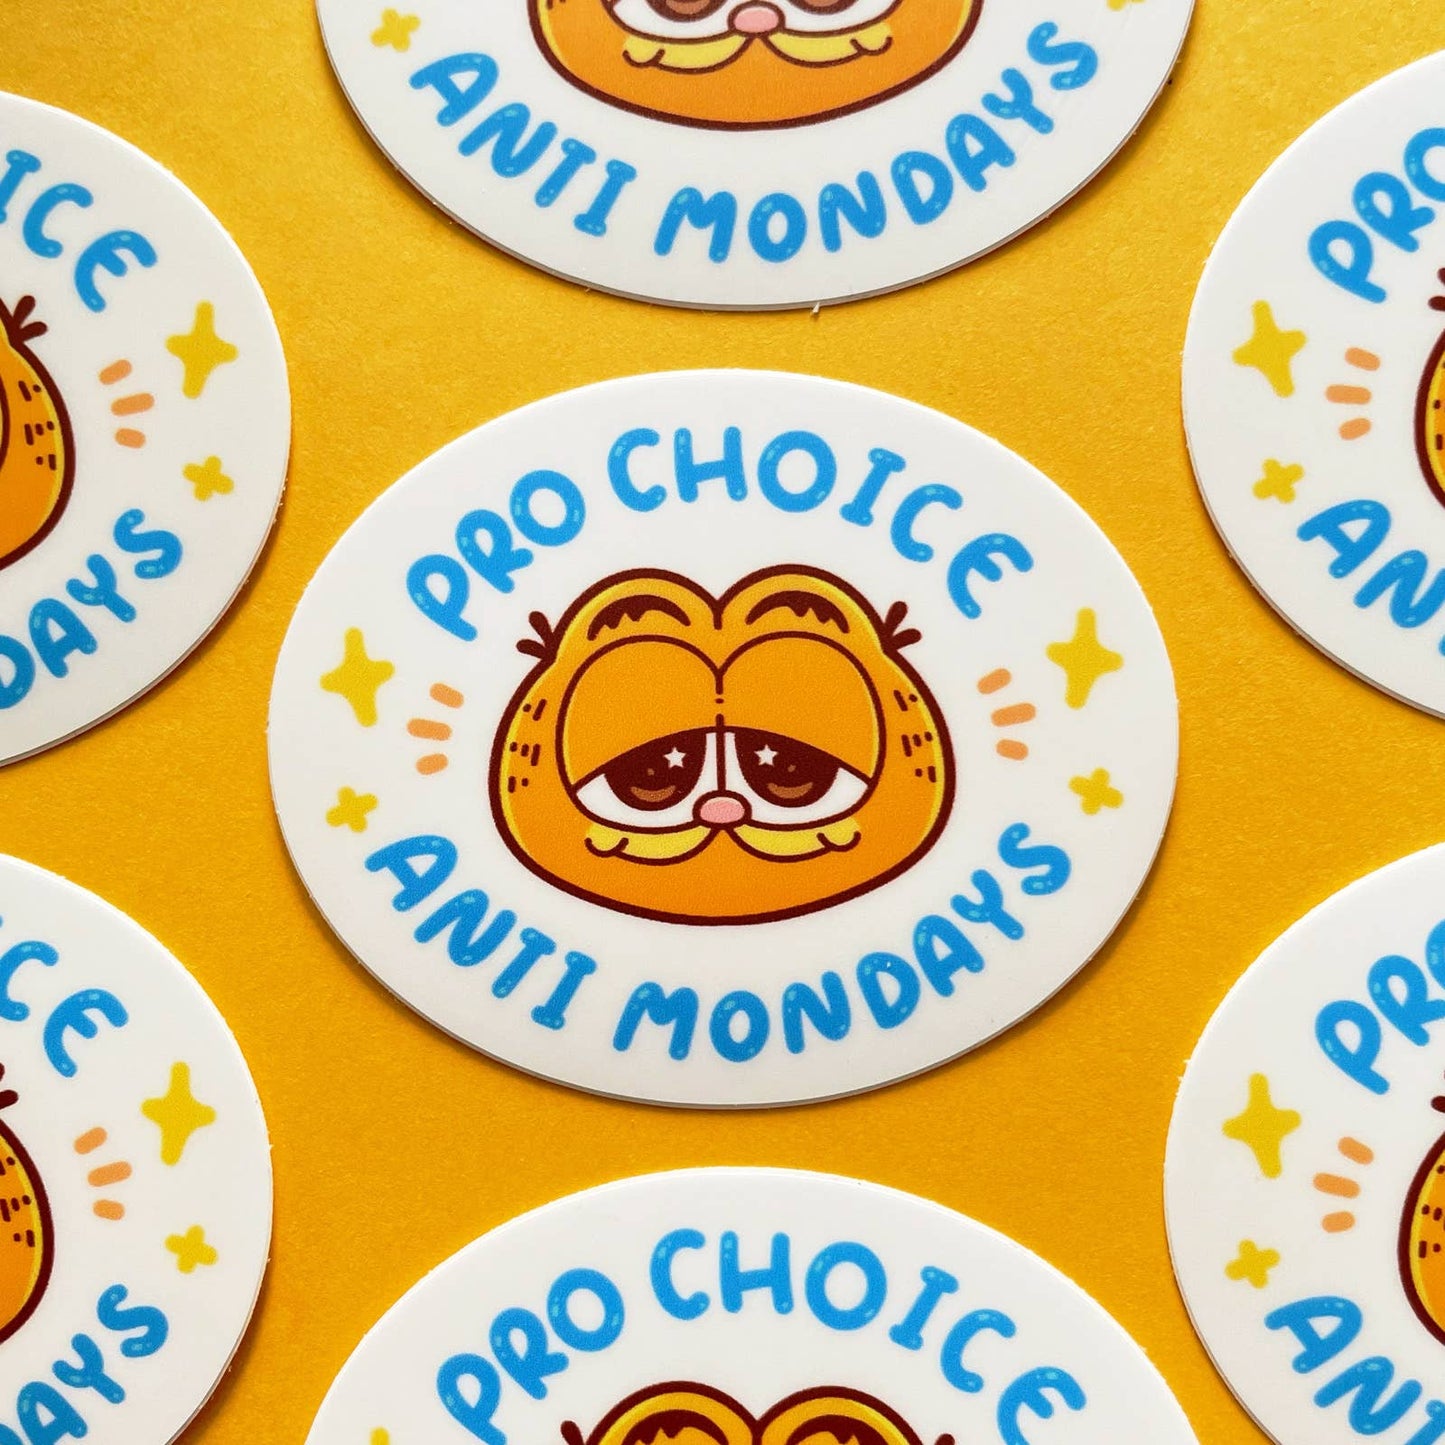 Pro Choice Anti Mondays Garfield Sticker